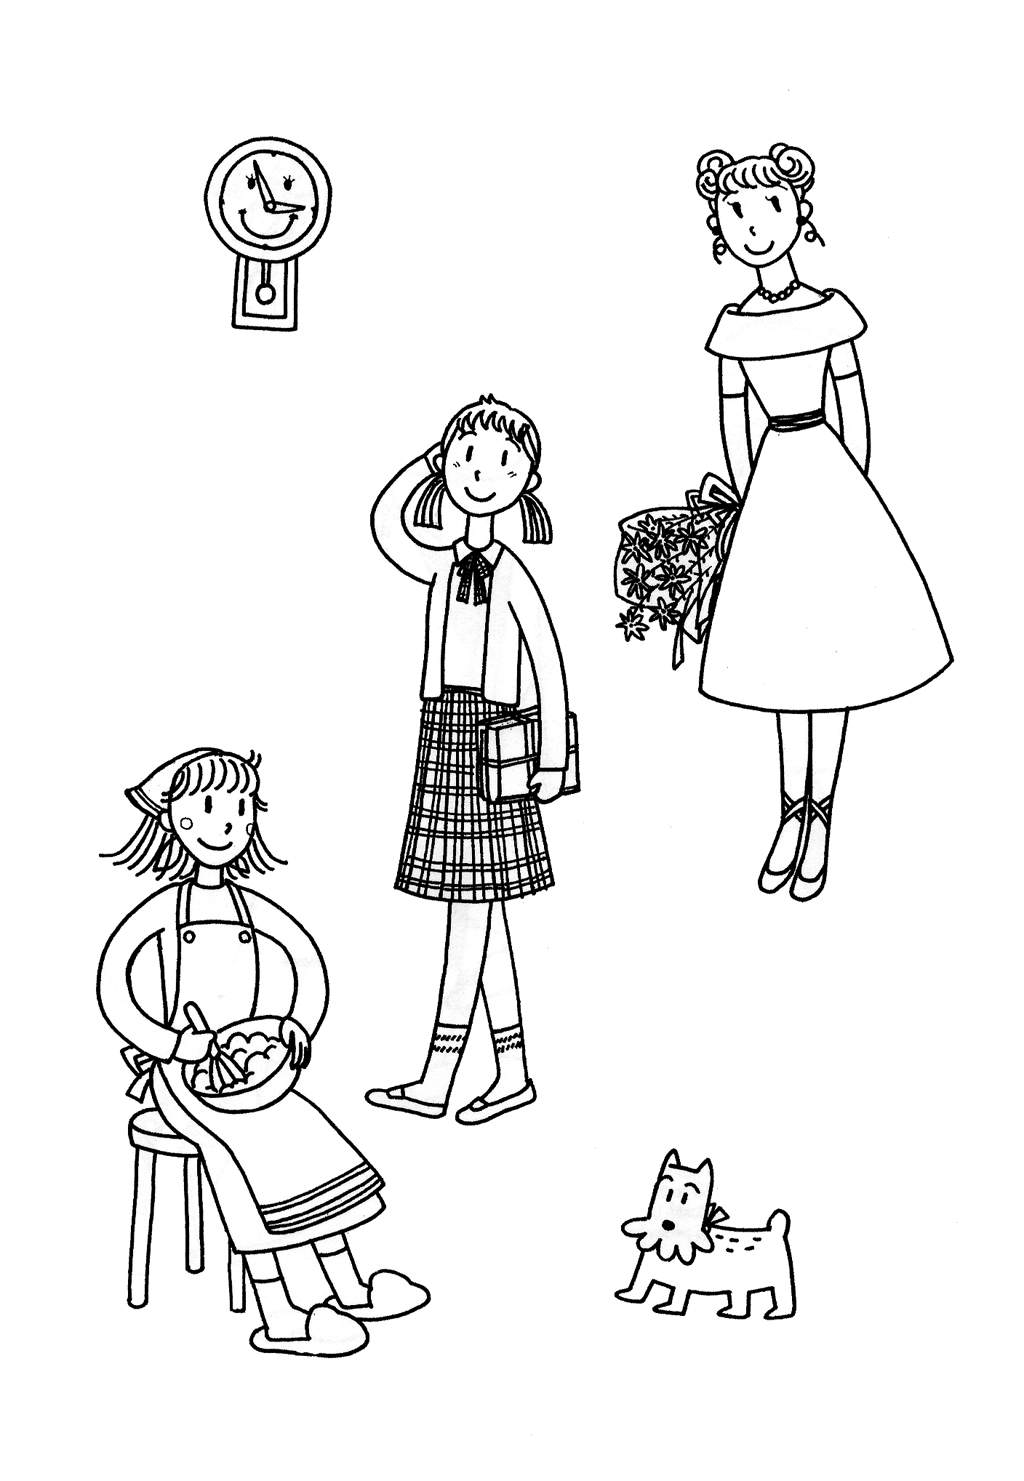 Le dessin du Manga 04 - Personnages feminin, Attitudes, Expressions numero d'image 123